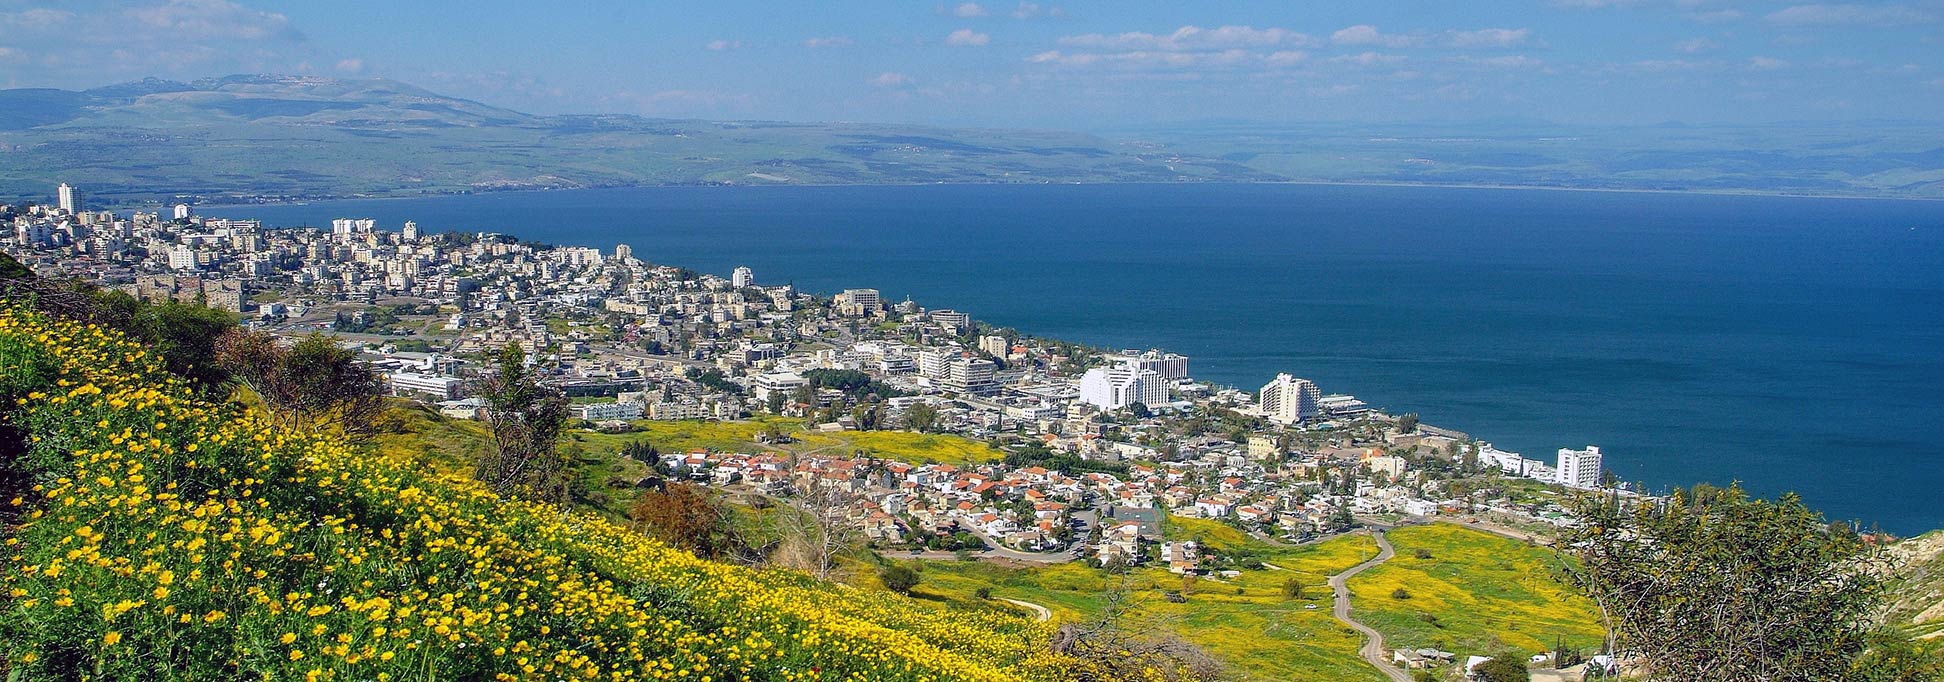 Tiberias town at Sea of Galilee (Lake of Gennesaret), Israel